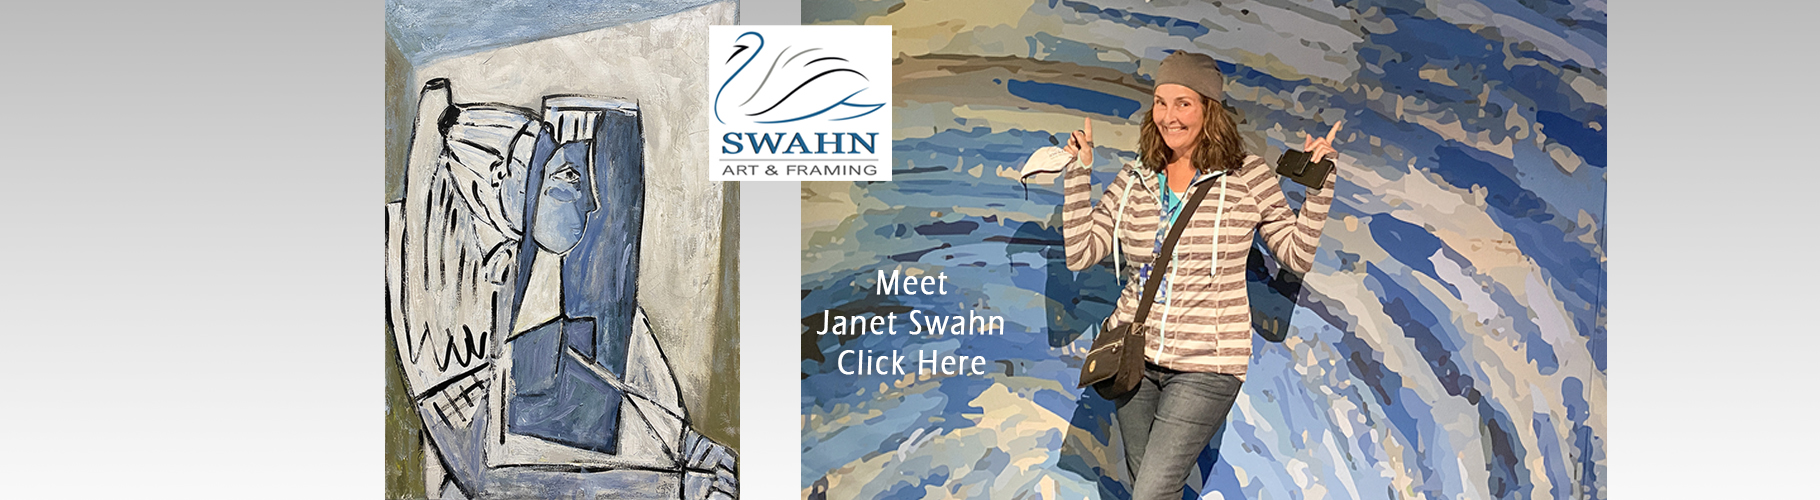 Meet Janet Swahn